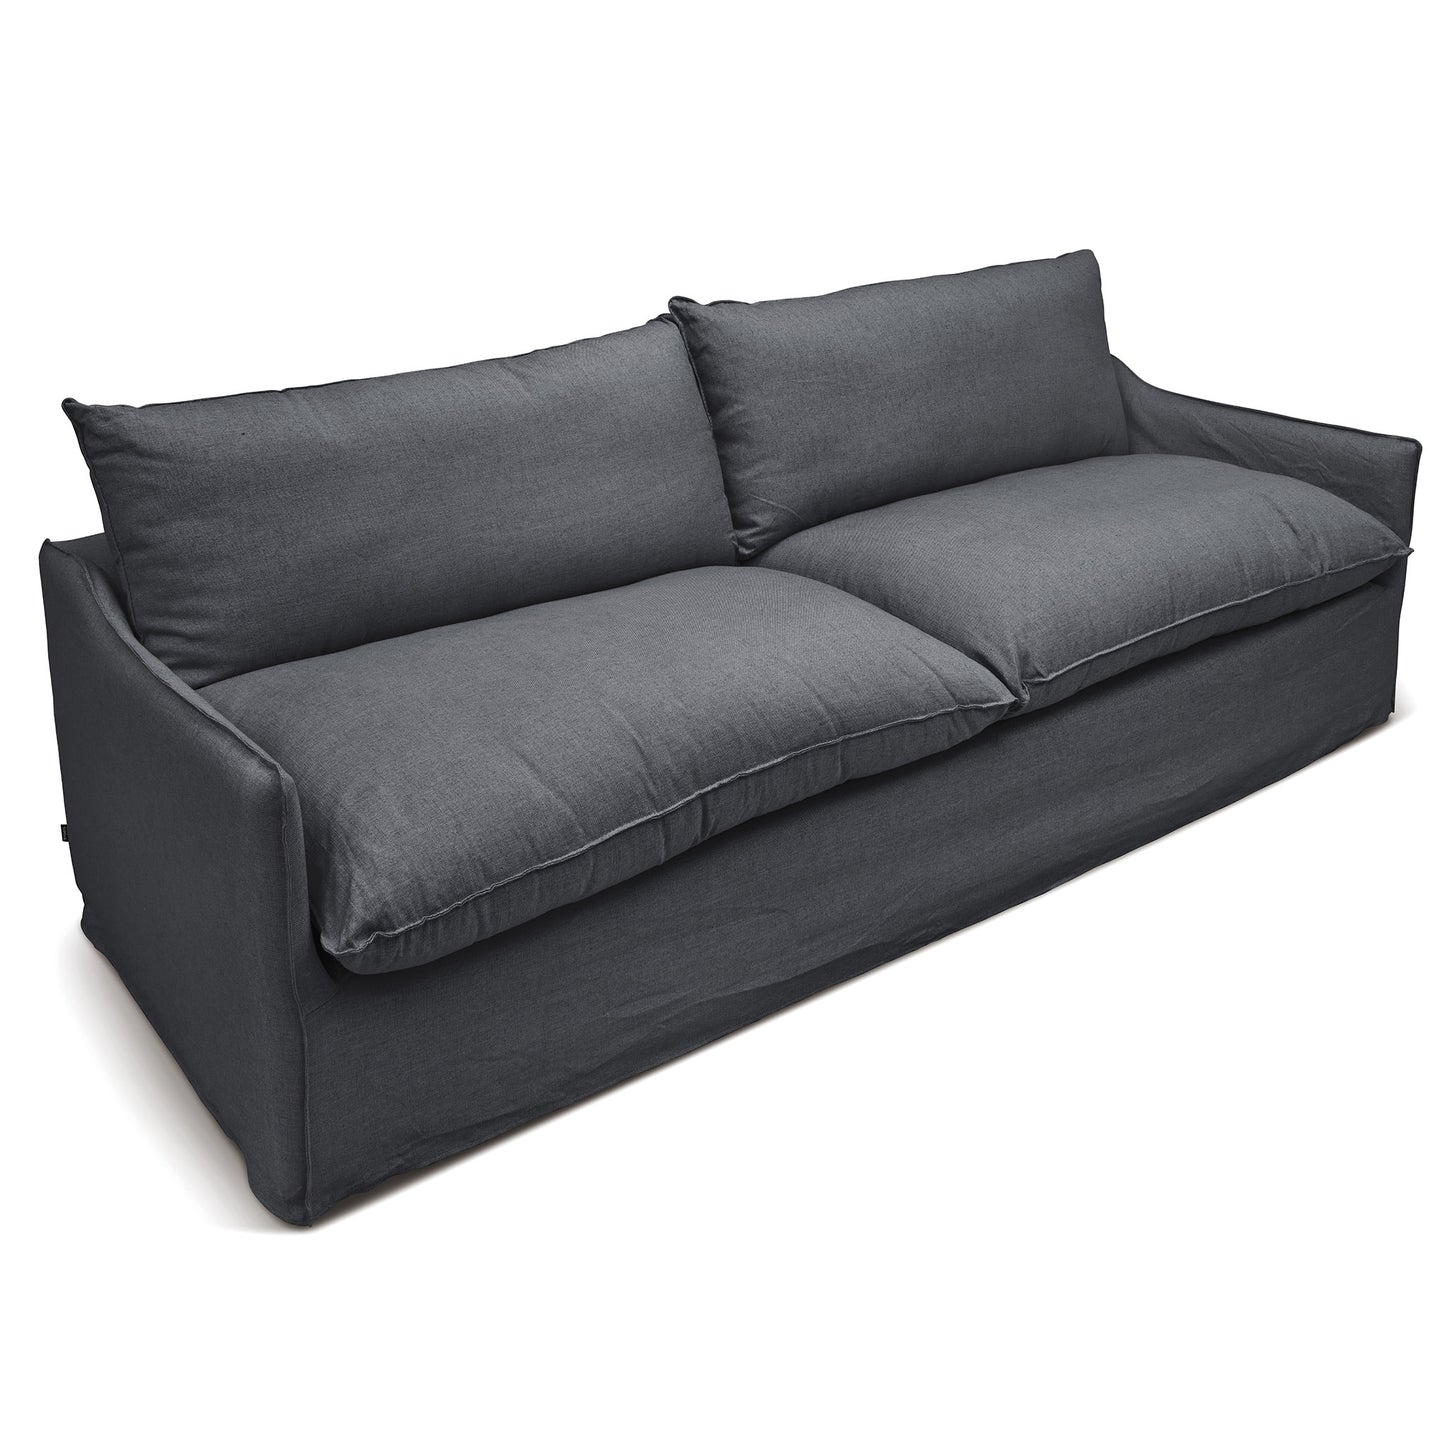 Zion 4-sits soffa